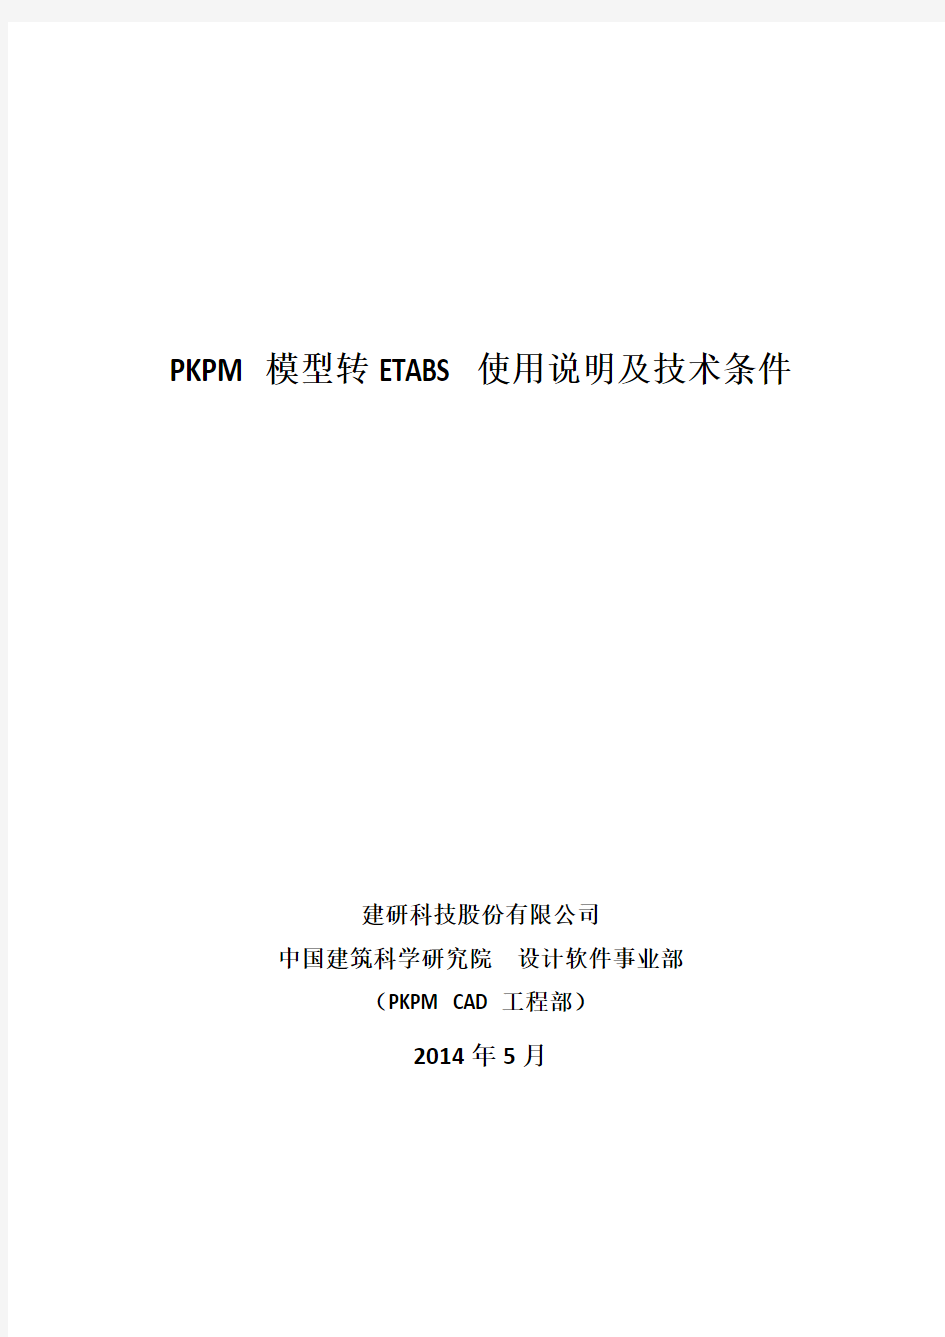 PKPM软件说明书-PKPM模型转ETABS用户手册